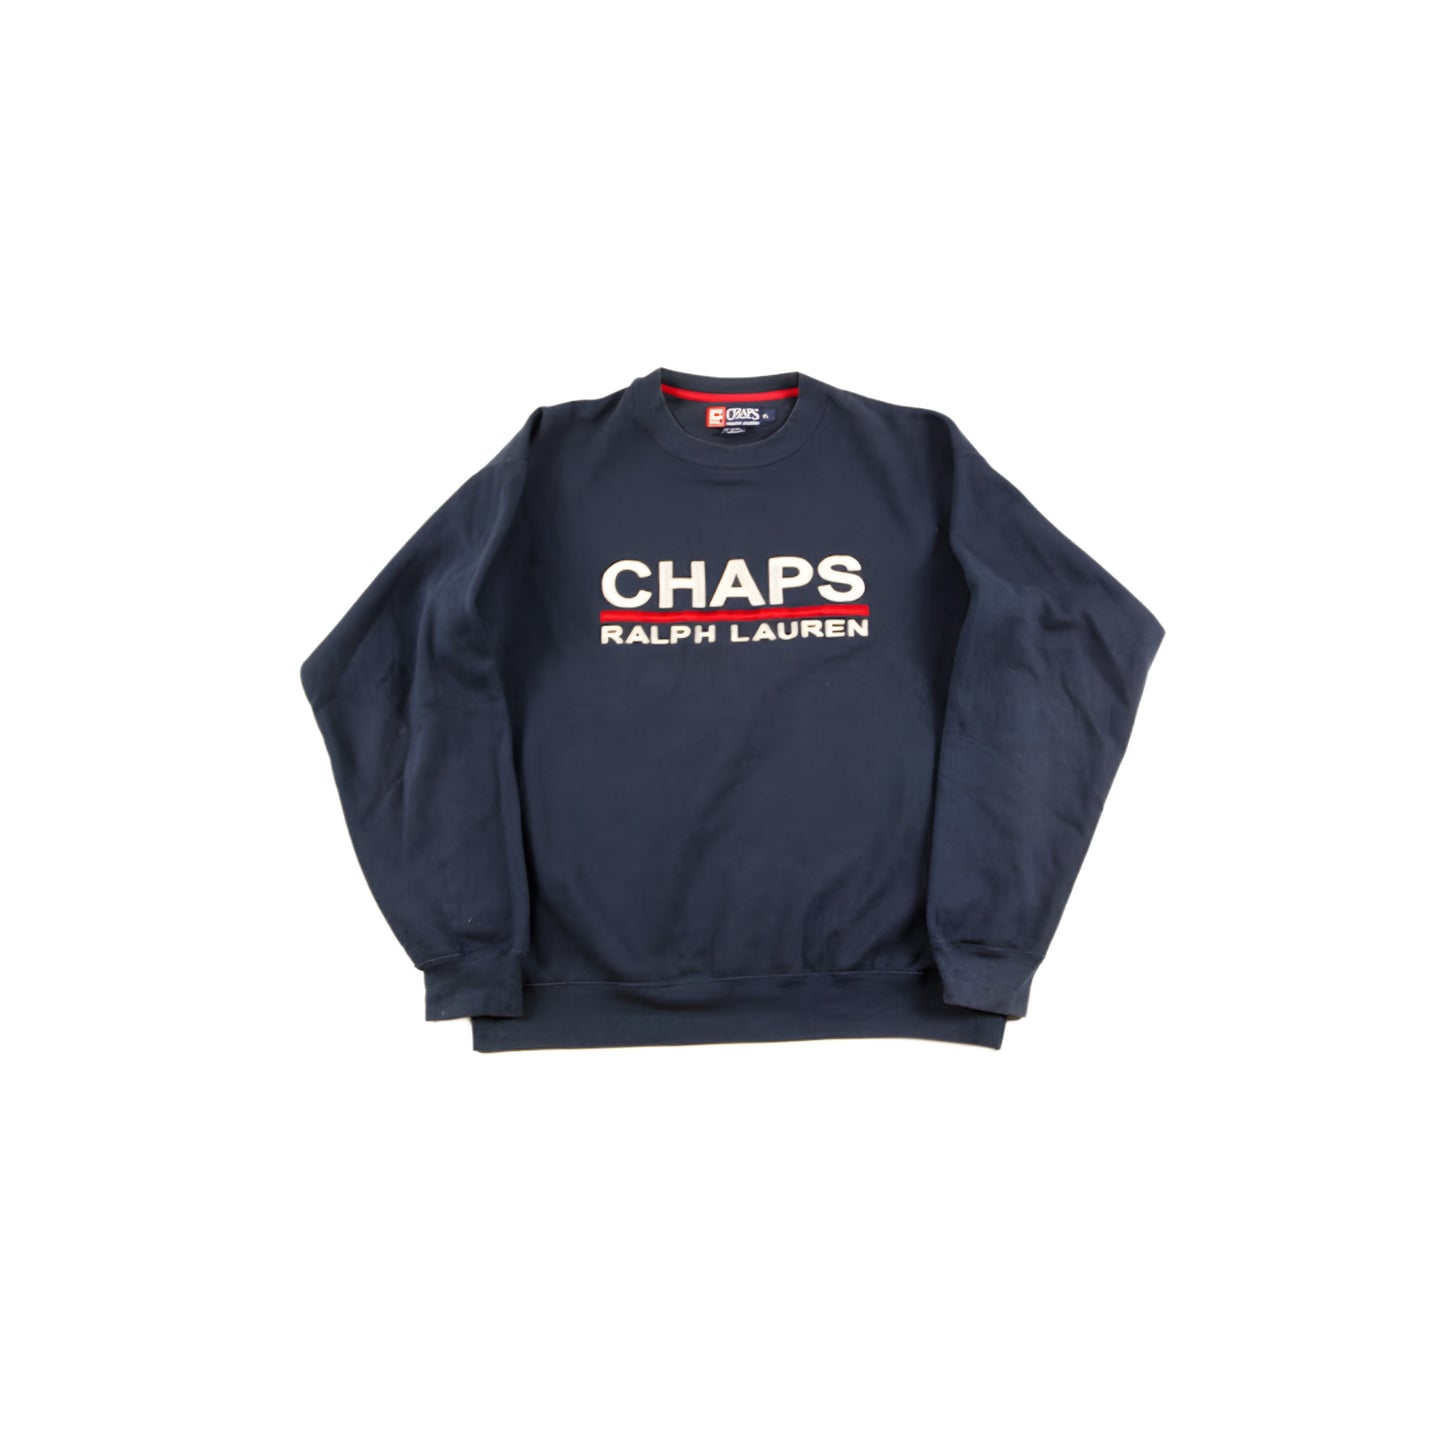 Chaps Ralph Lauren Vintage Spellout Sweater